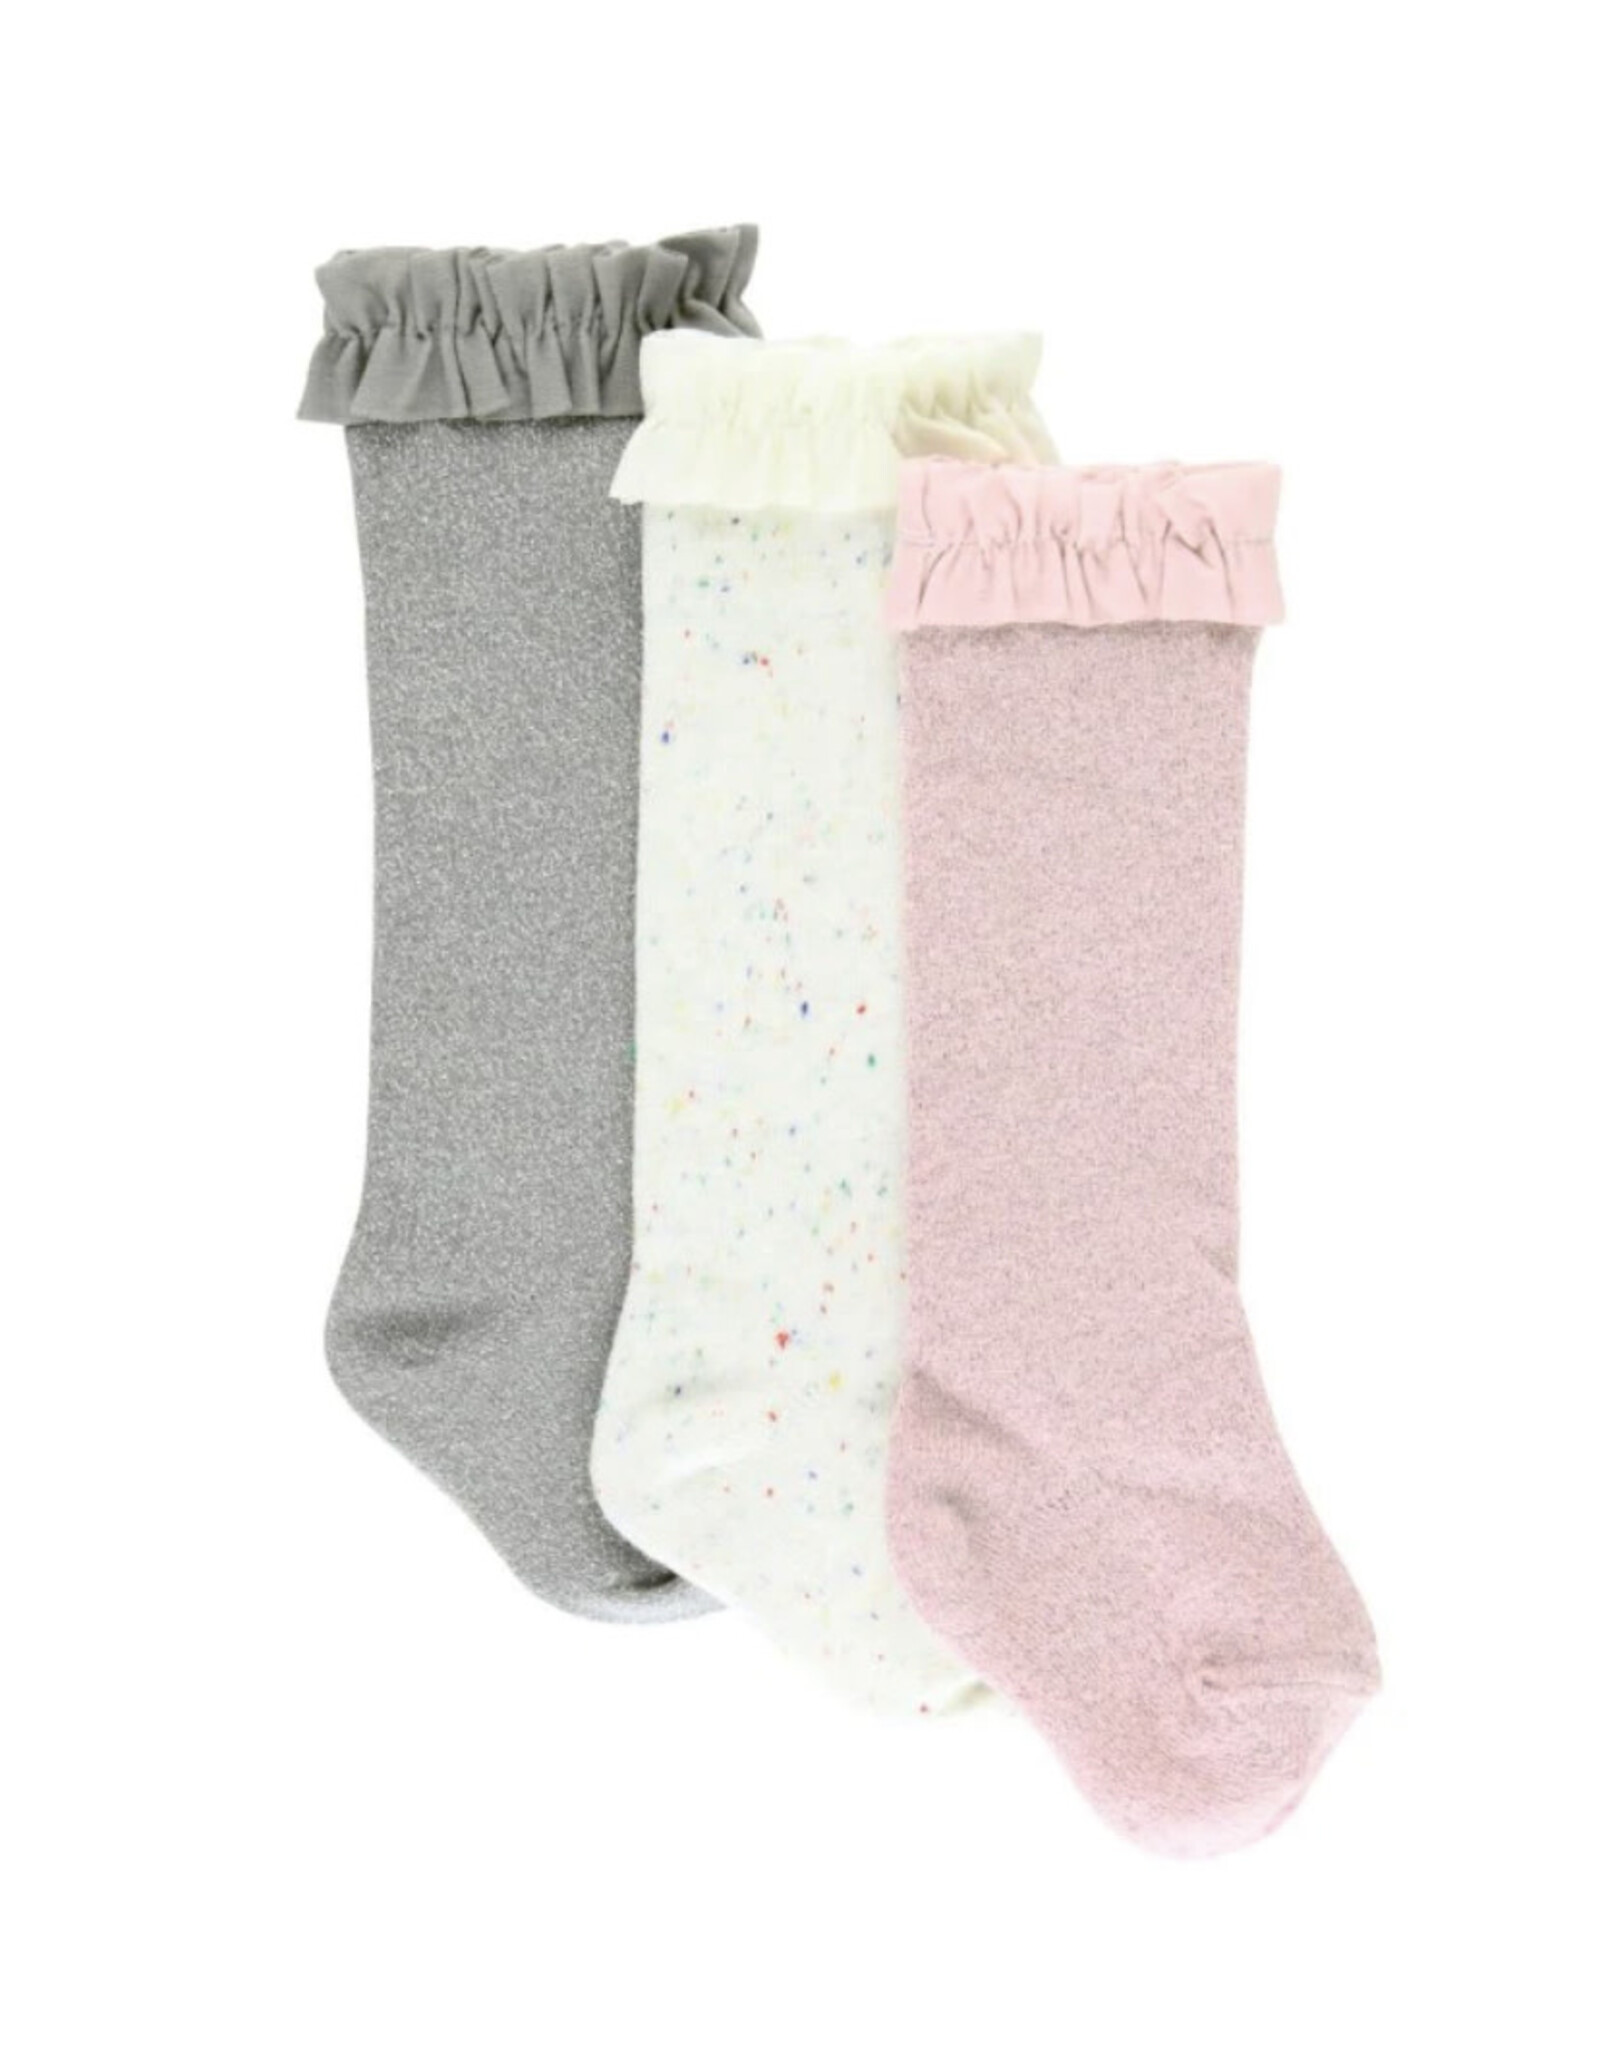 Ruffle Butts Ruffle Butts- 3PK Confetti, Heather Gray & Ballet Pink Sparkle Knee High Socks